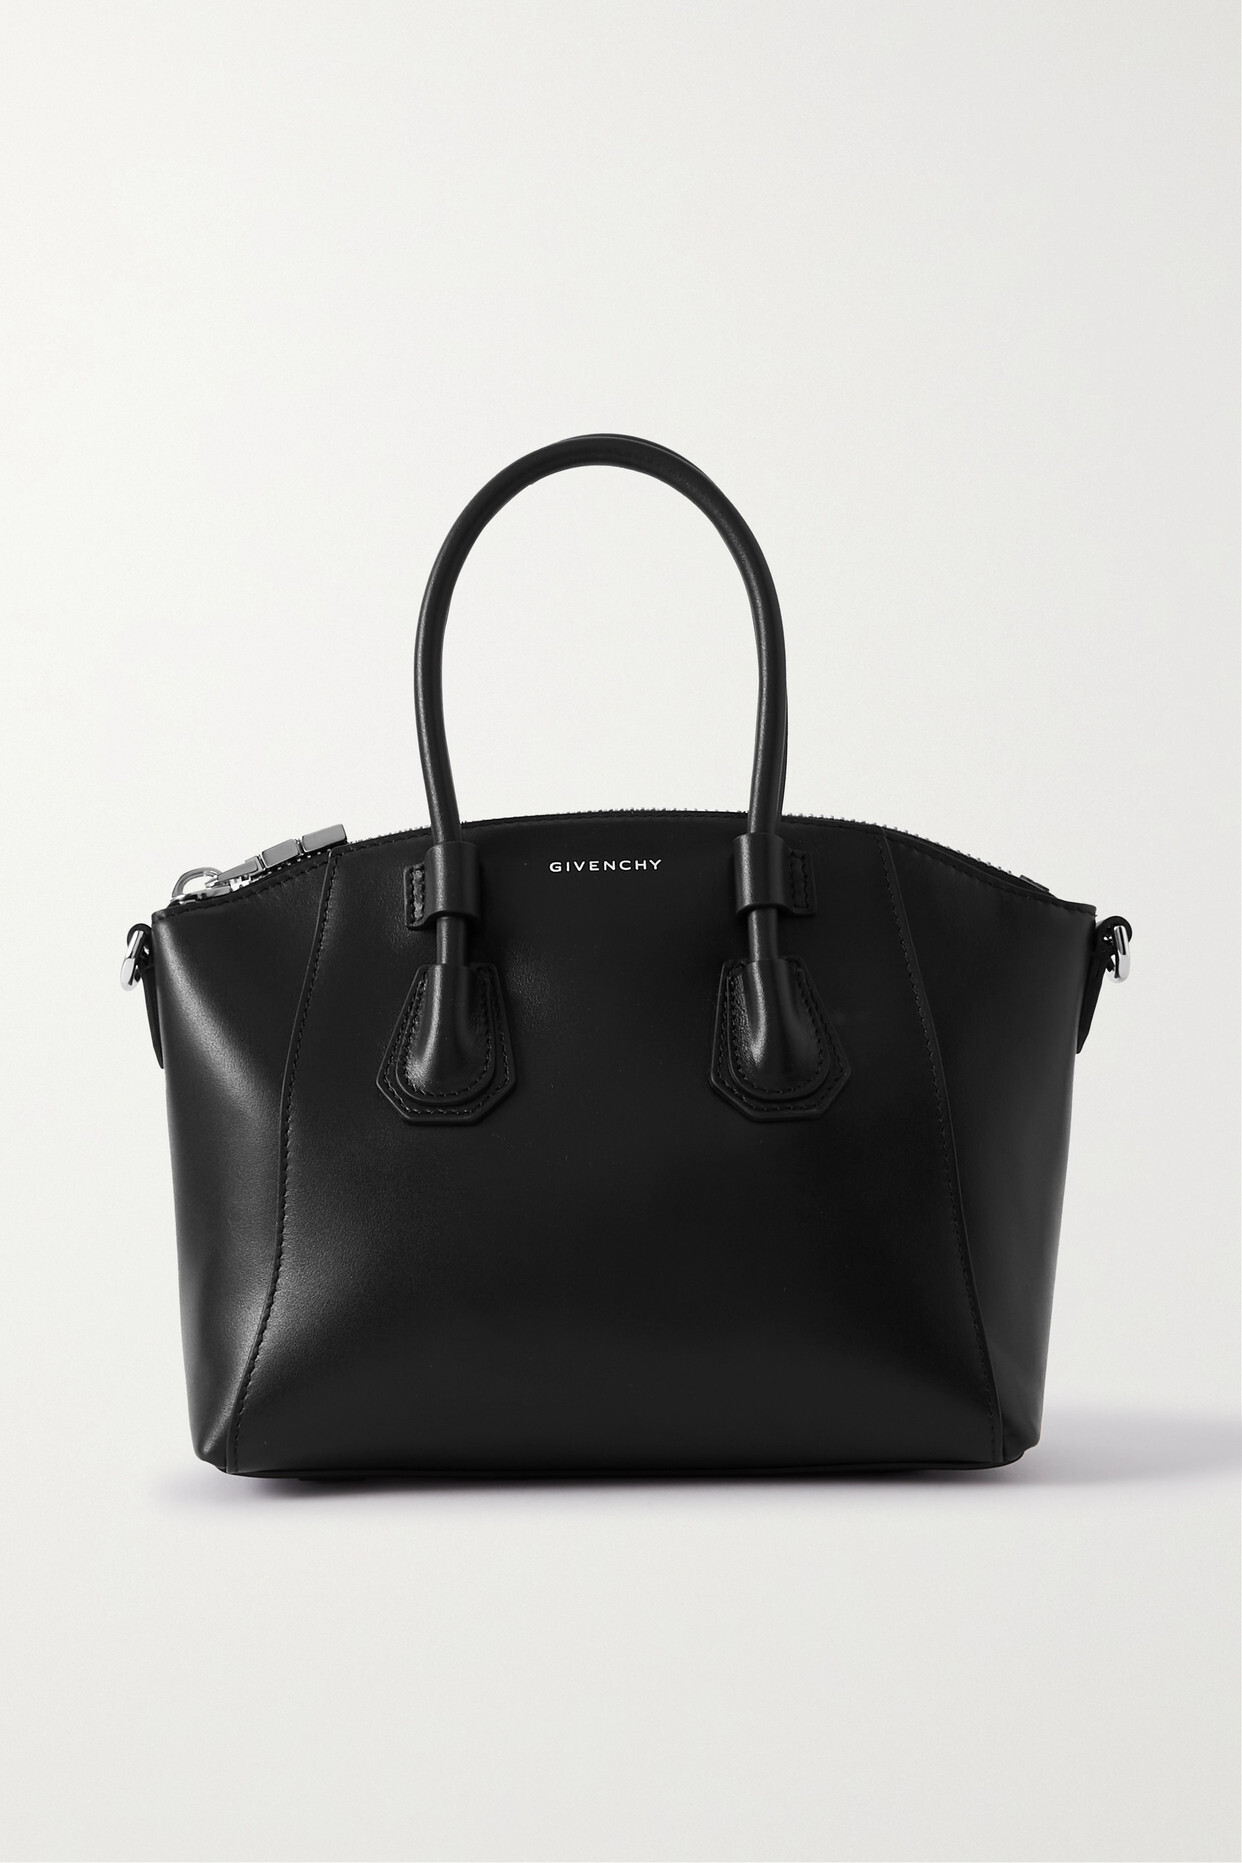 Givenchy - Antigona Mini Leather Tote - Black